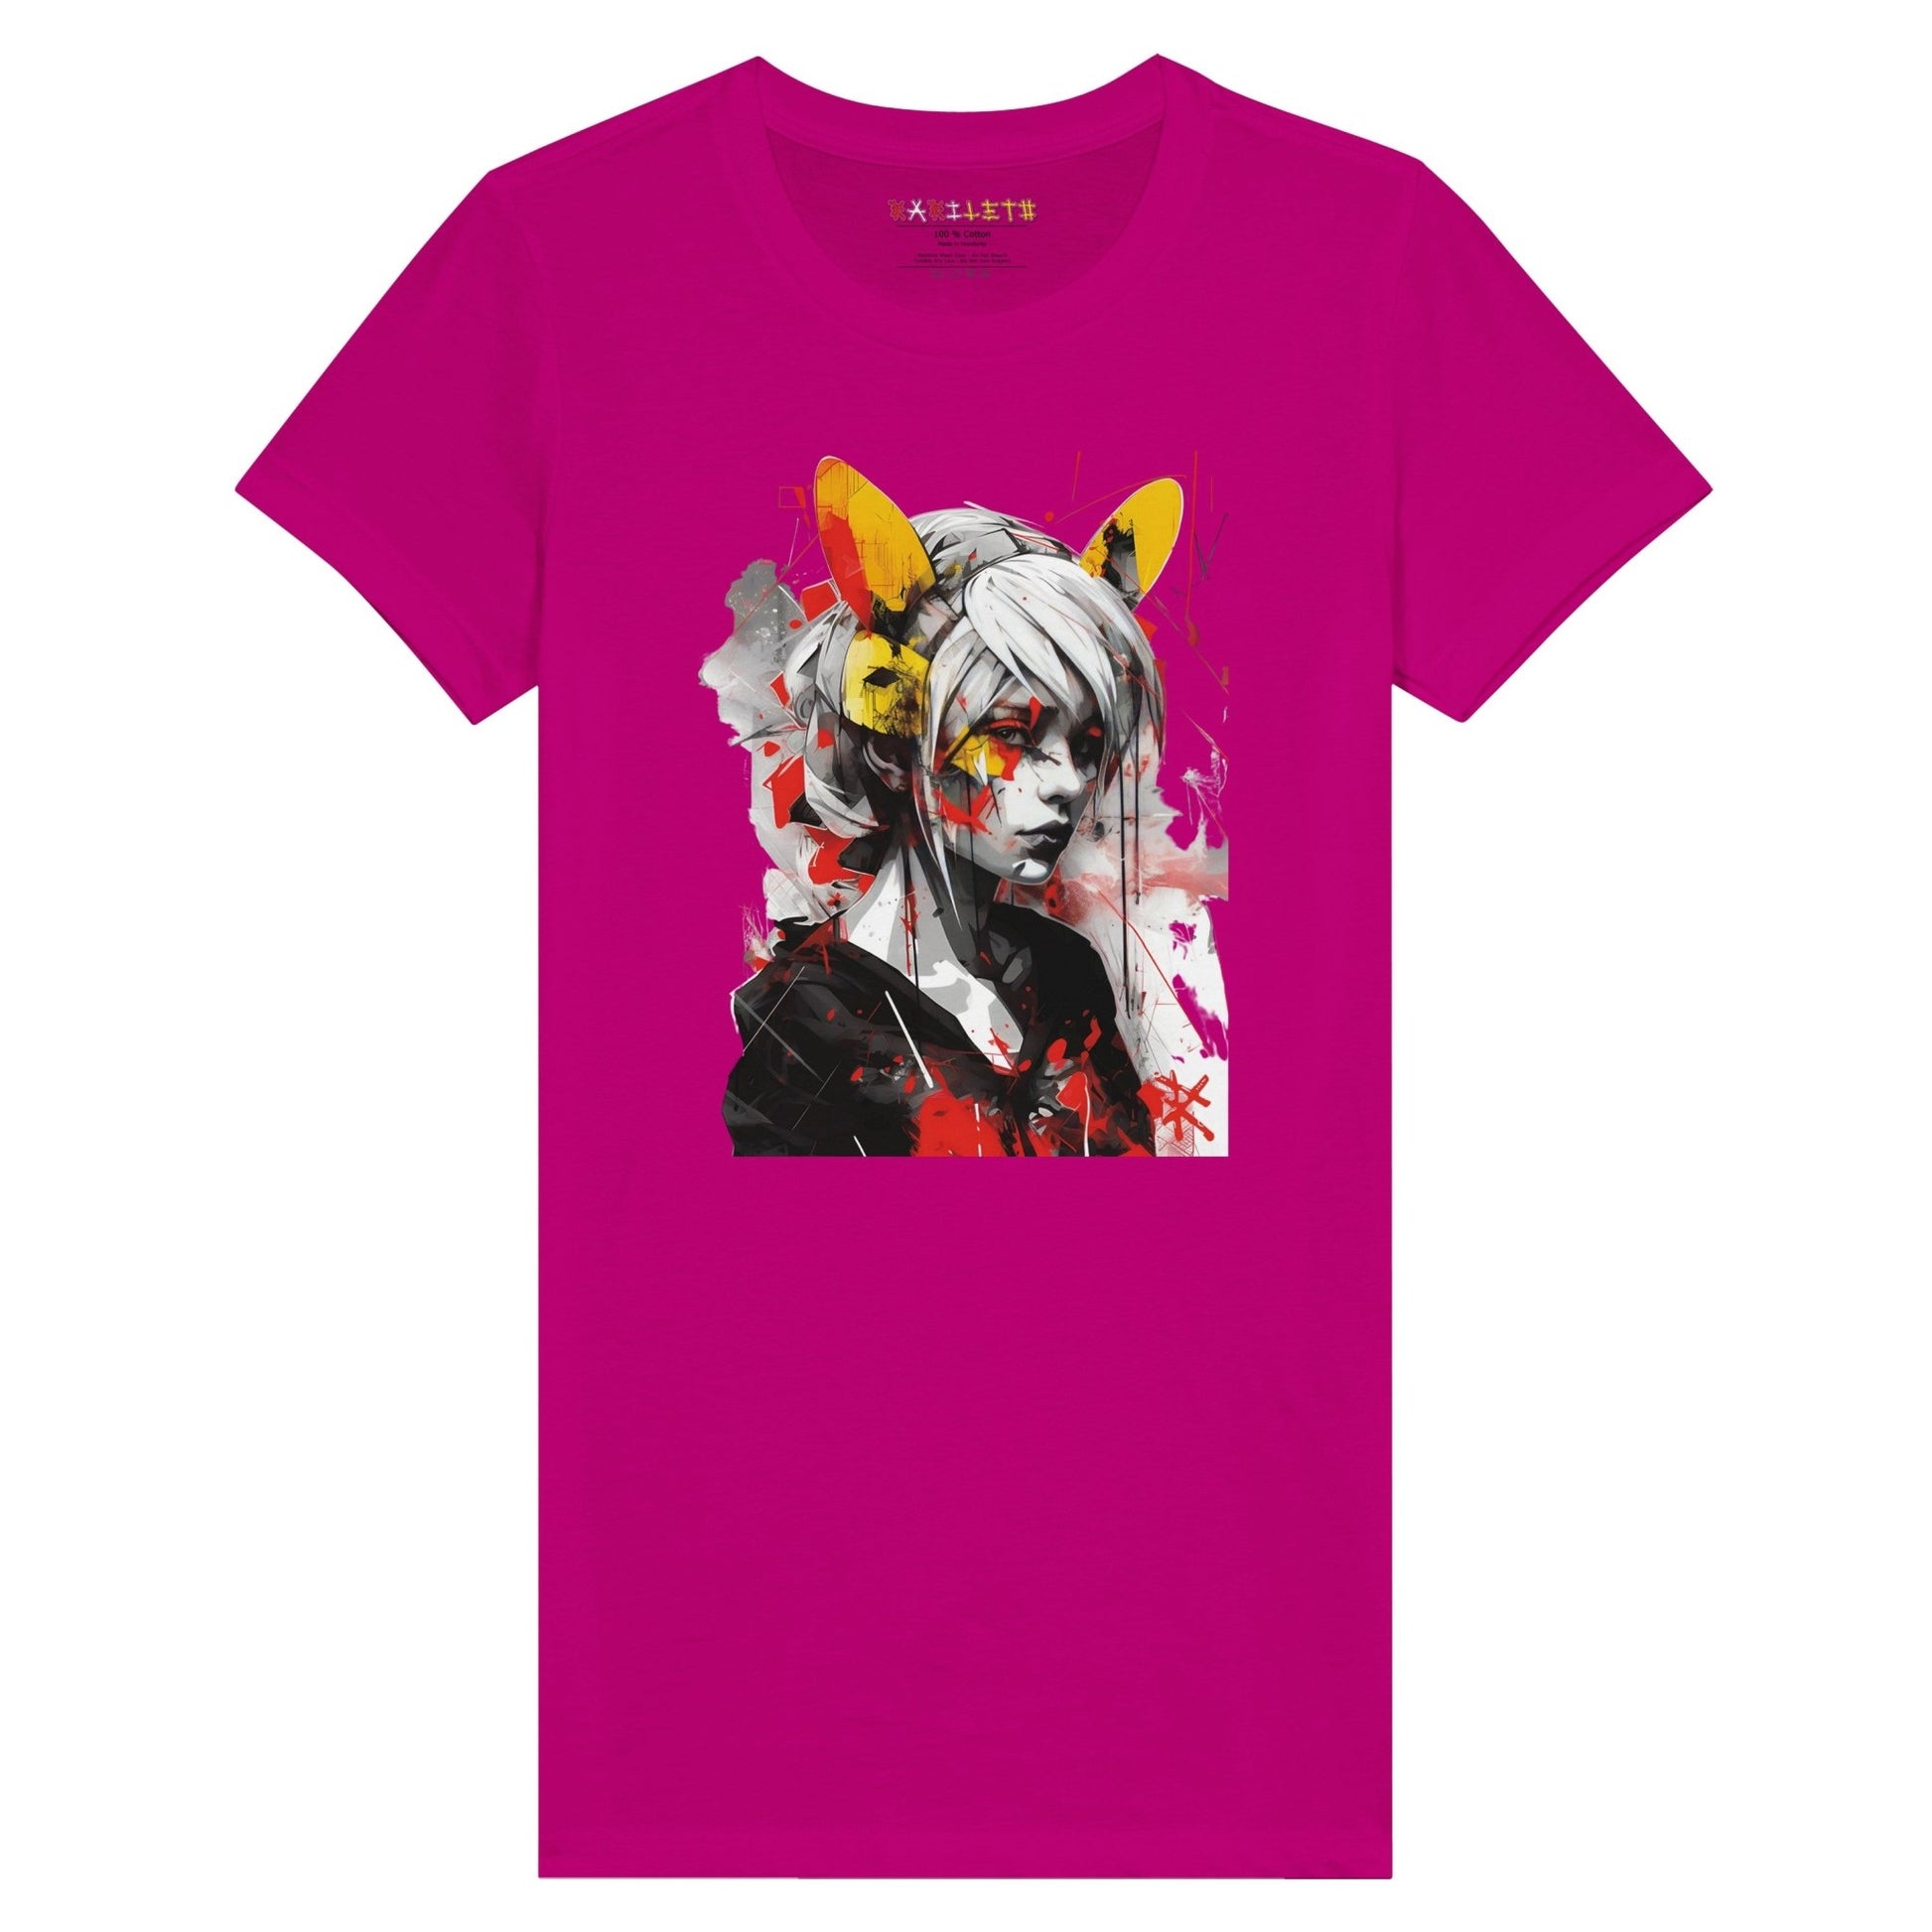 GIRL WITH CAT EARS Premium Tee - Rarileto t shirts - Berry - S